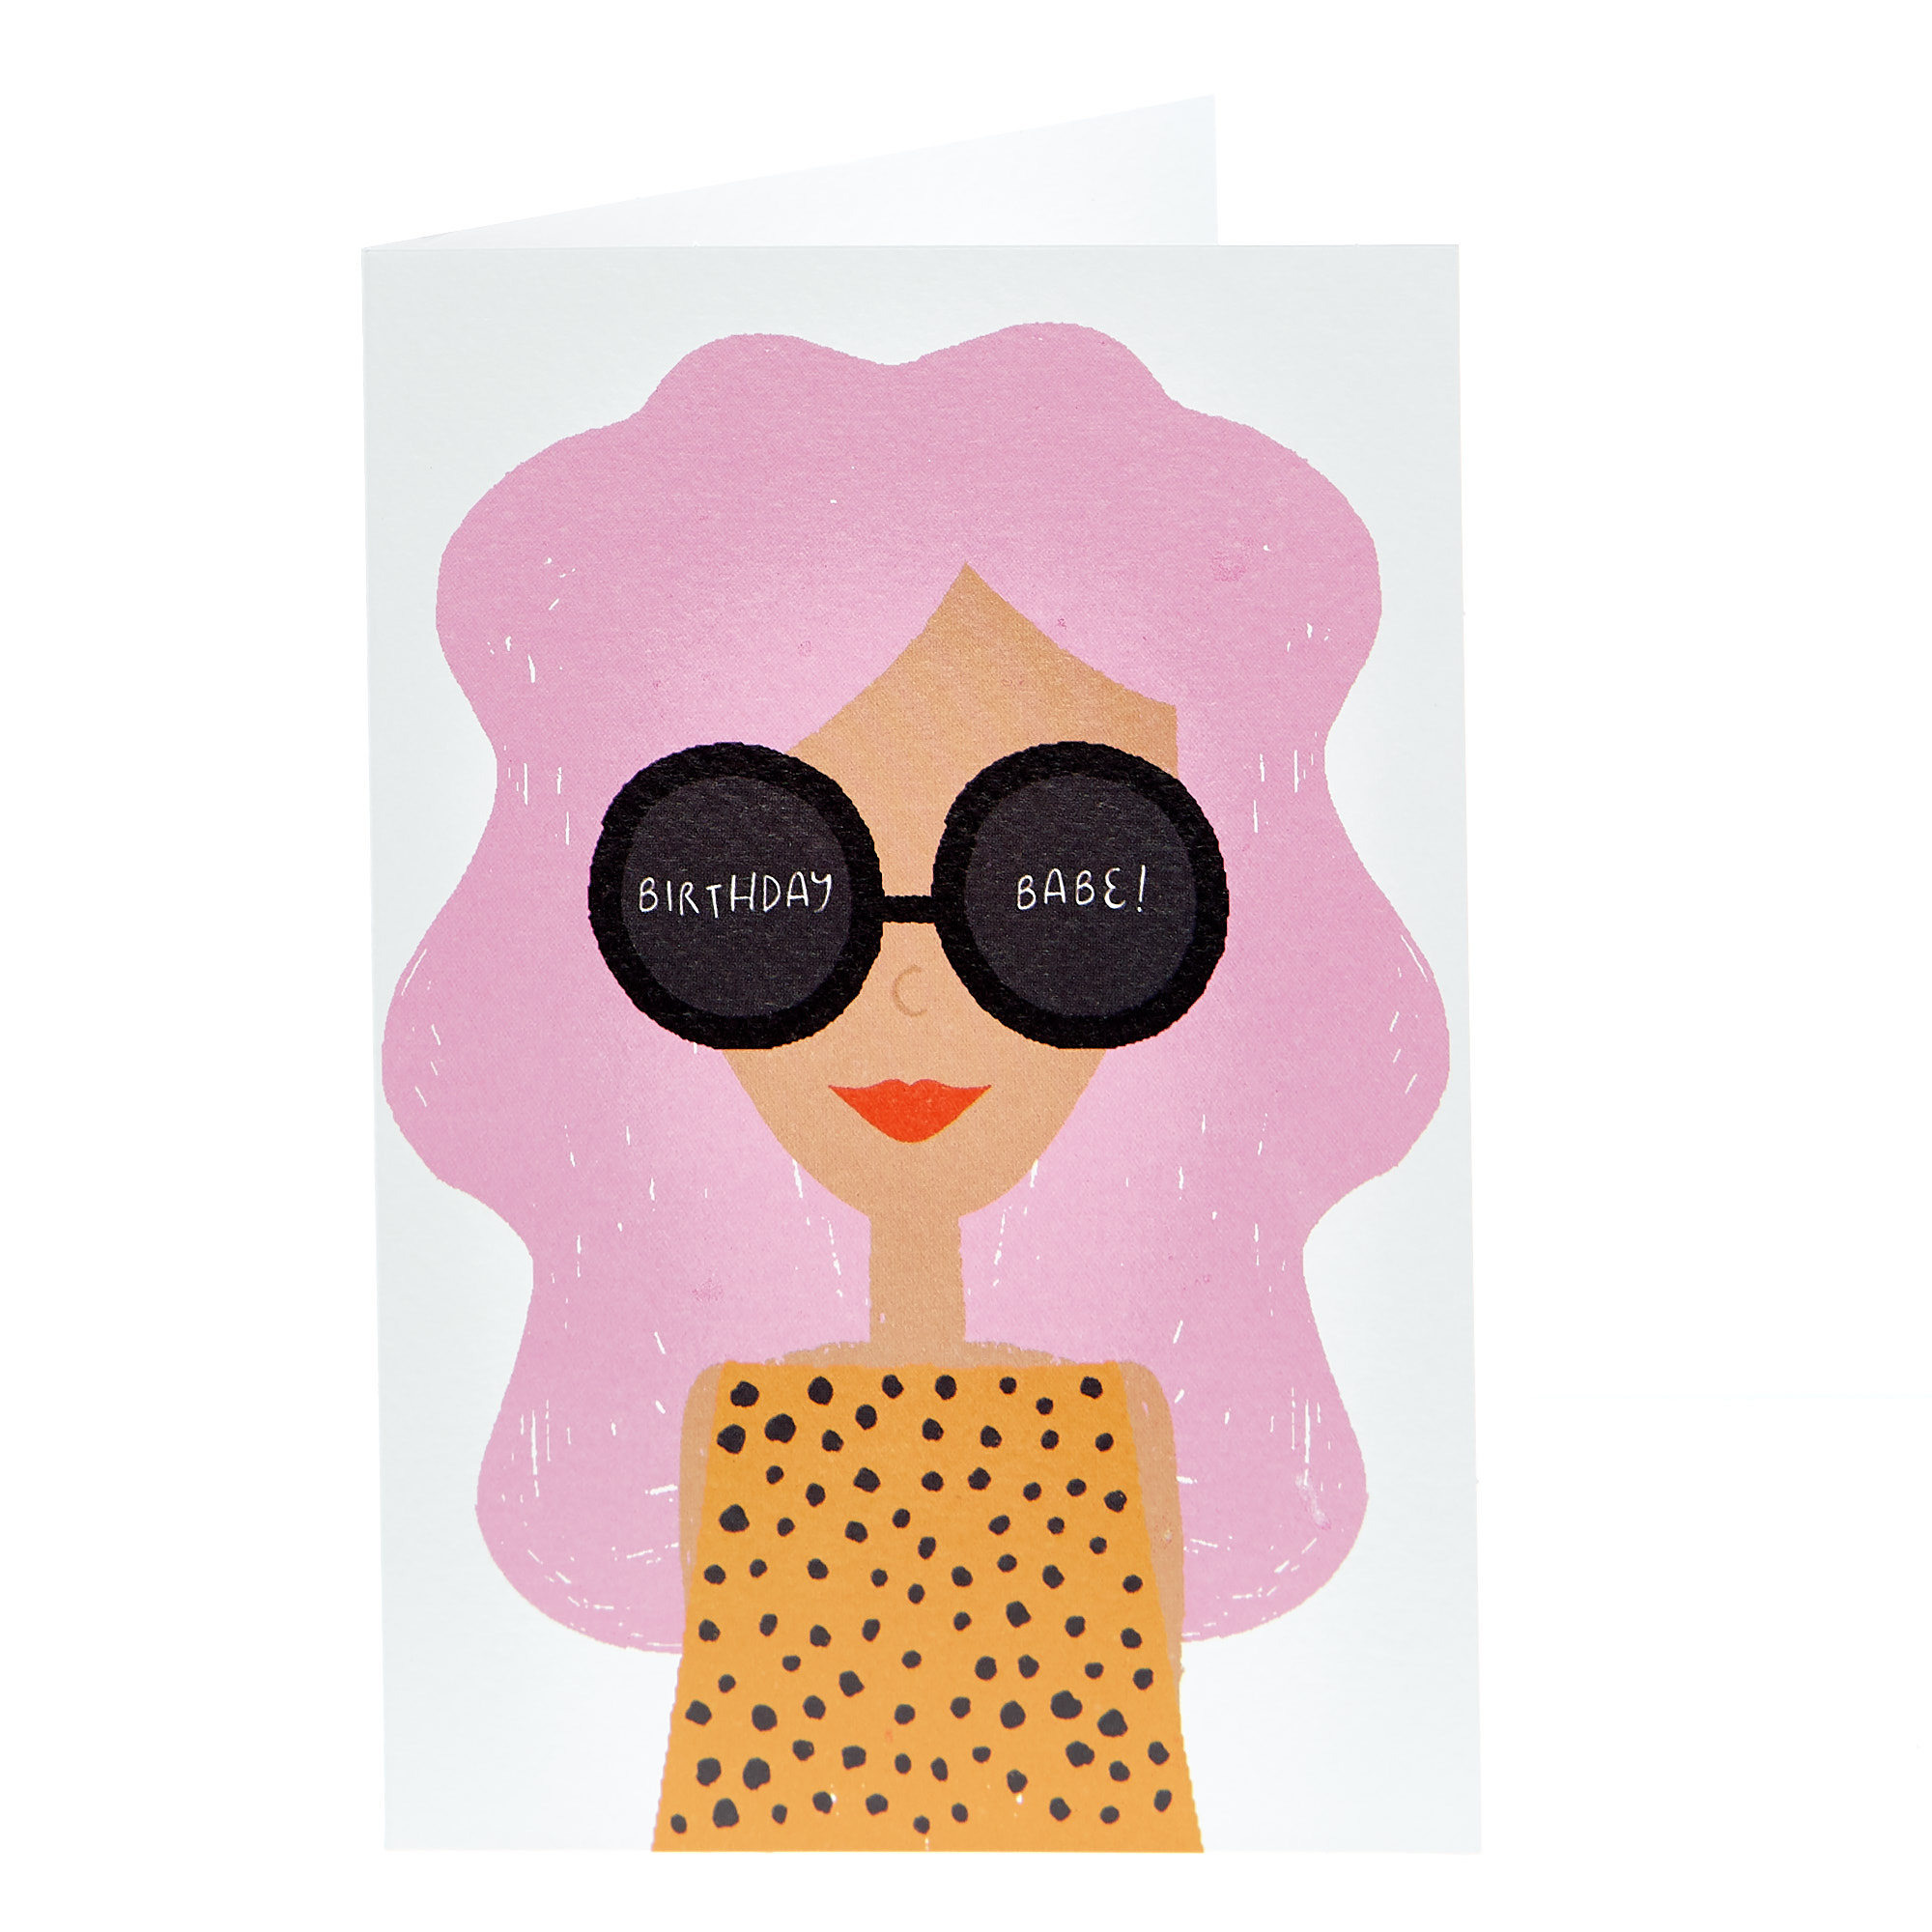 Birthday Card - Birthday Babe Sunglasses